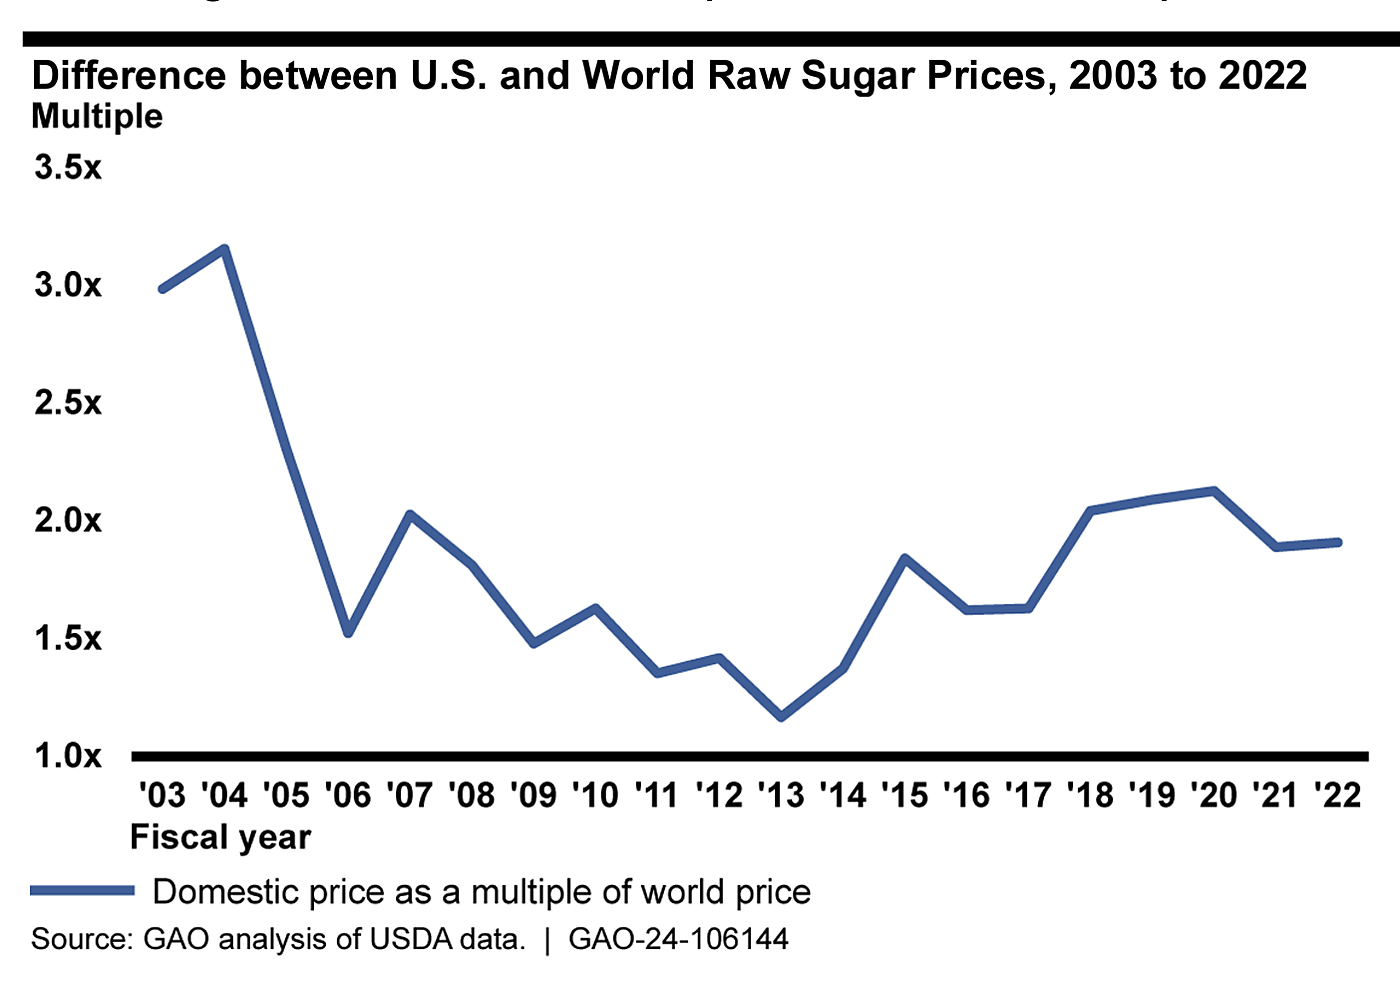 Raw sugar prices